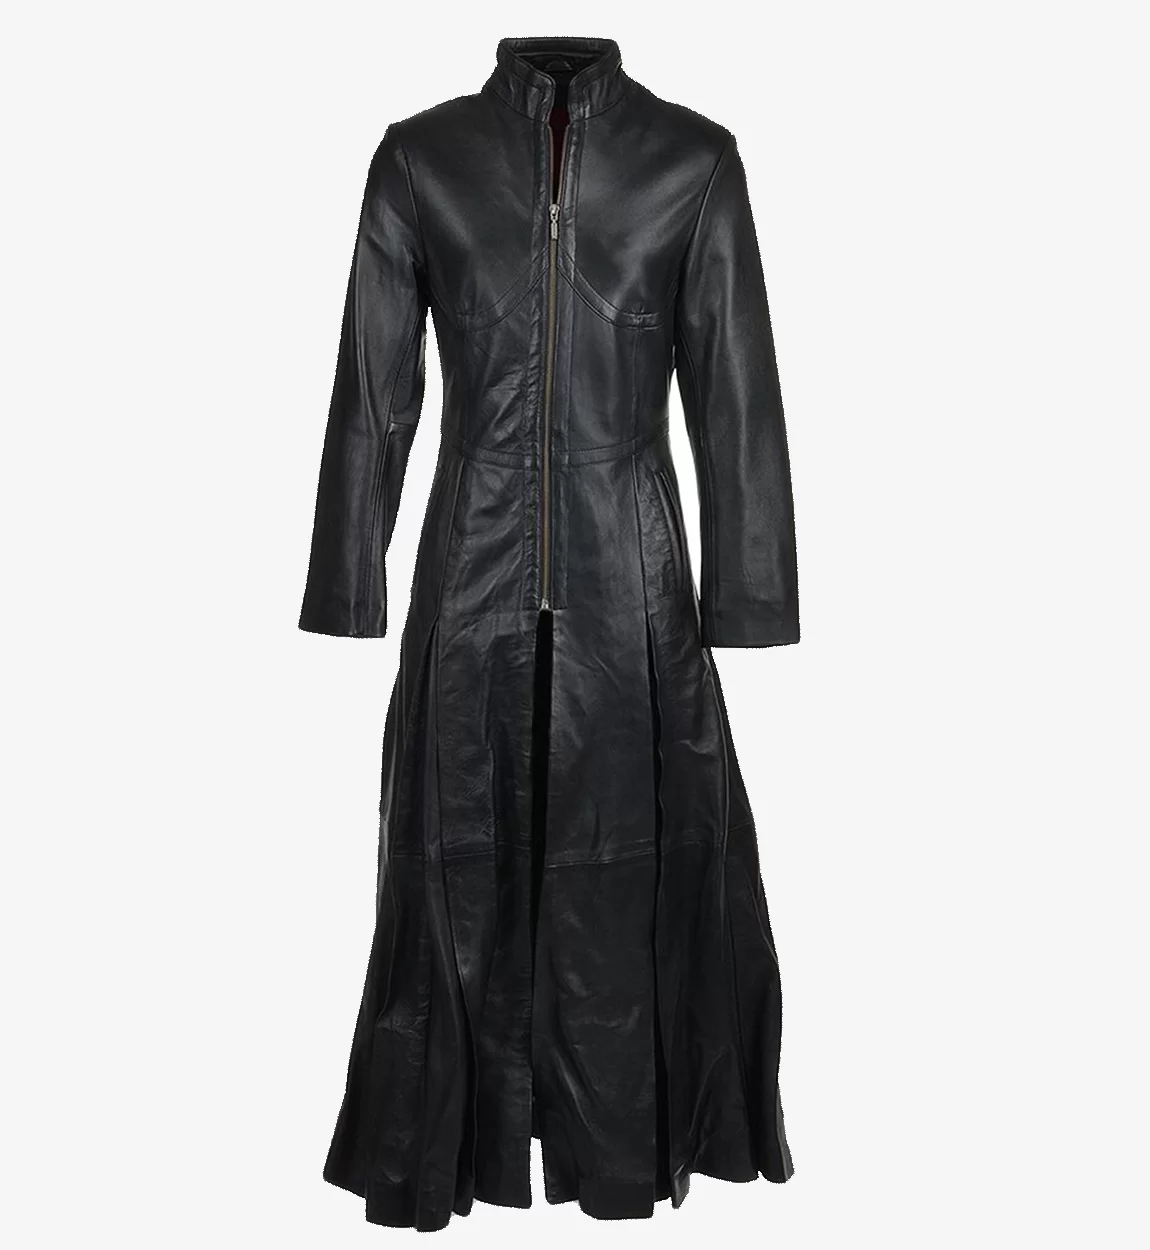 Womens-Black-Real-Sheepskin-Gothic-Style-Long-Length-Leather-Coat.webp